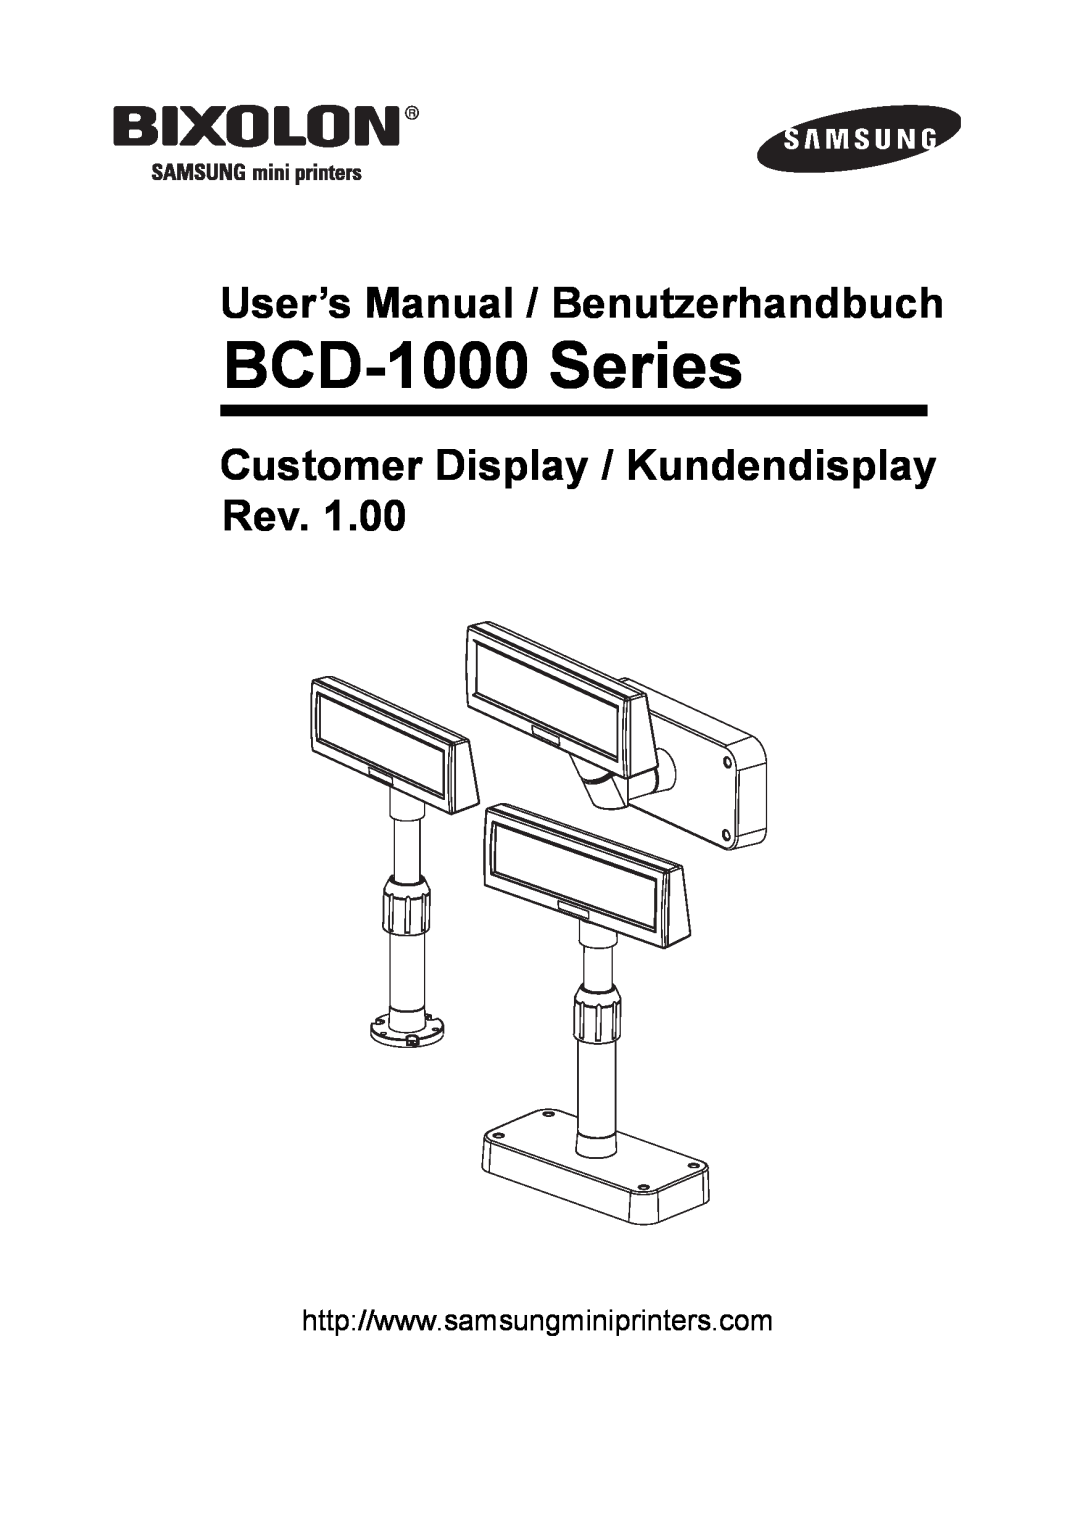 Samsung user manual BCD-1000 Series, User’s Manual / Benutzerhandbuch, Customer Display / Kundendisplay Rev 